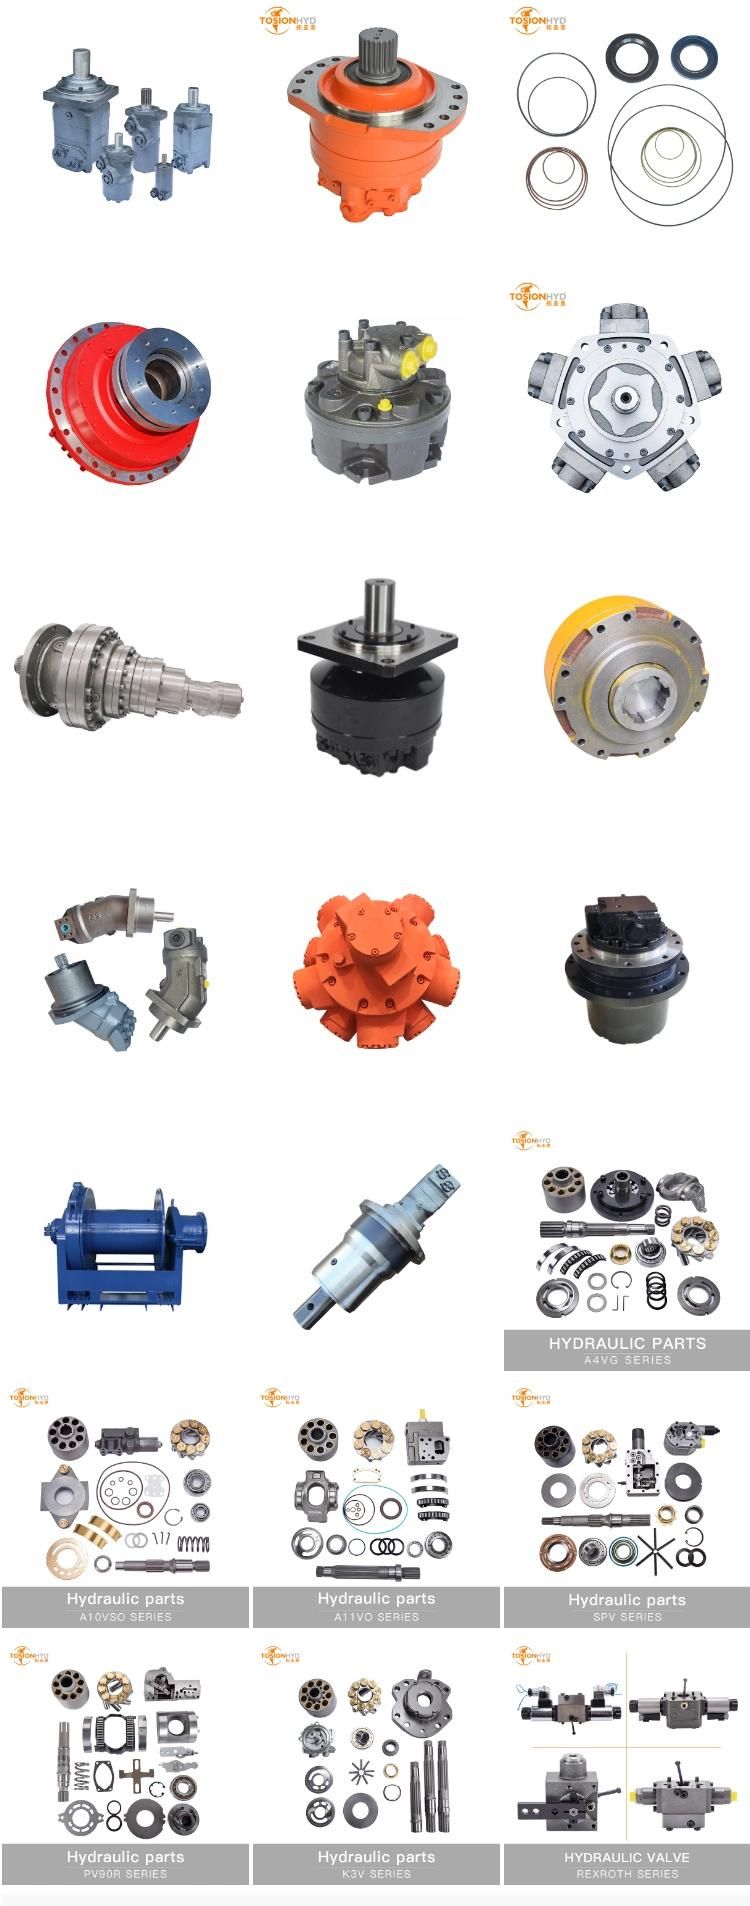 A6vm 200 Hydraulic Pump Parts with Rexroth Spare Repair Kits